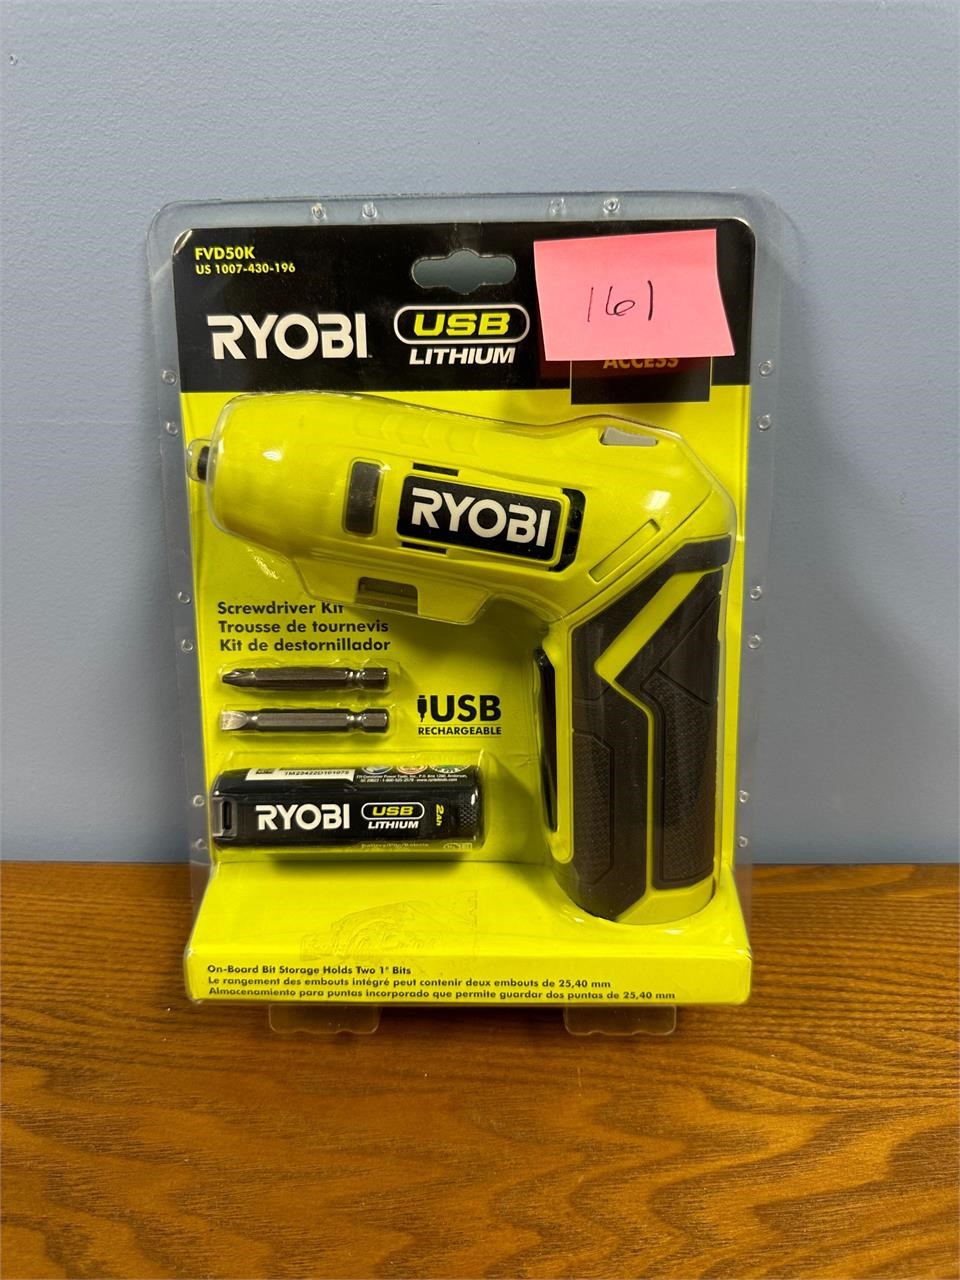 RYOBI USB Lithium Screwdriver Set